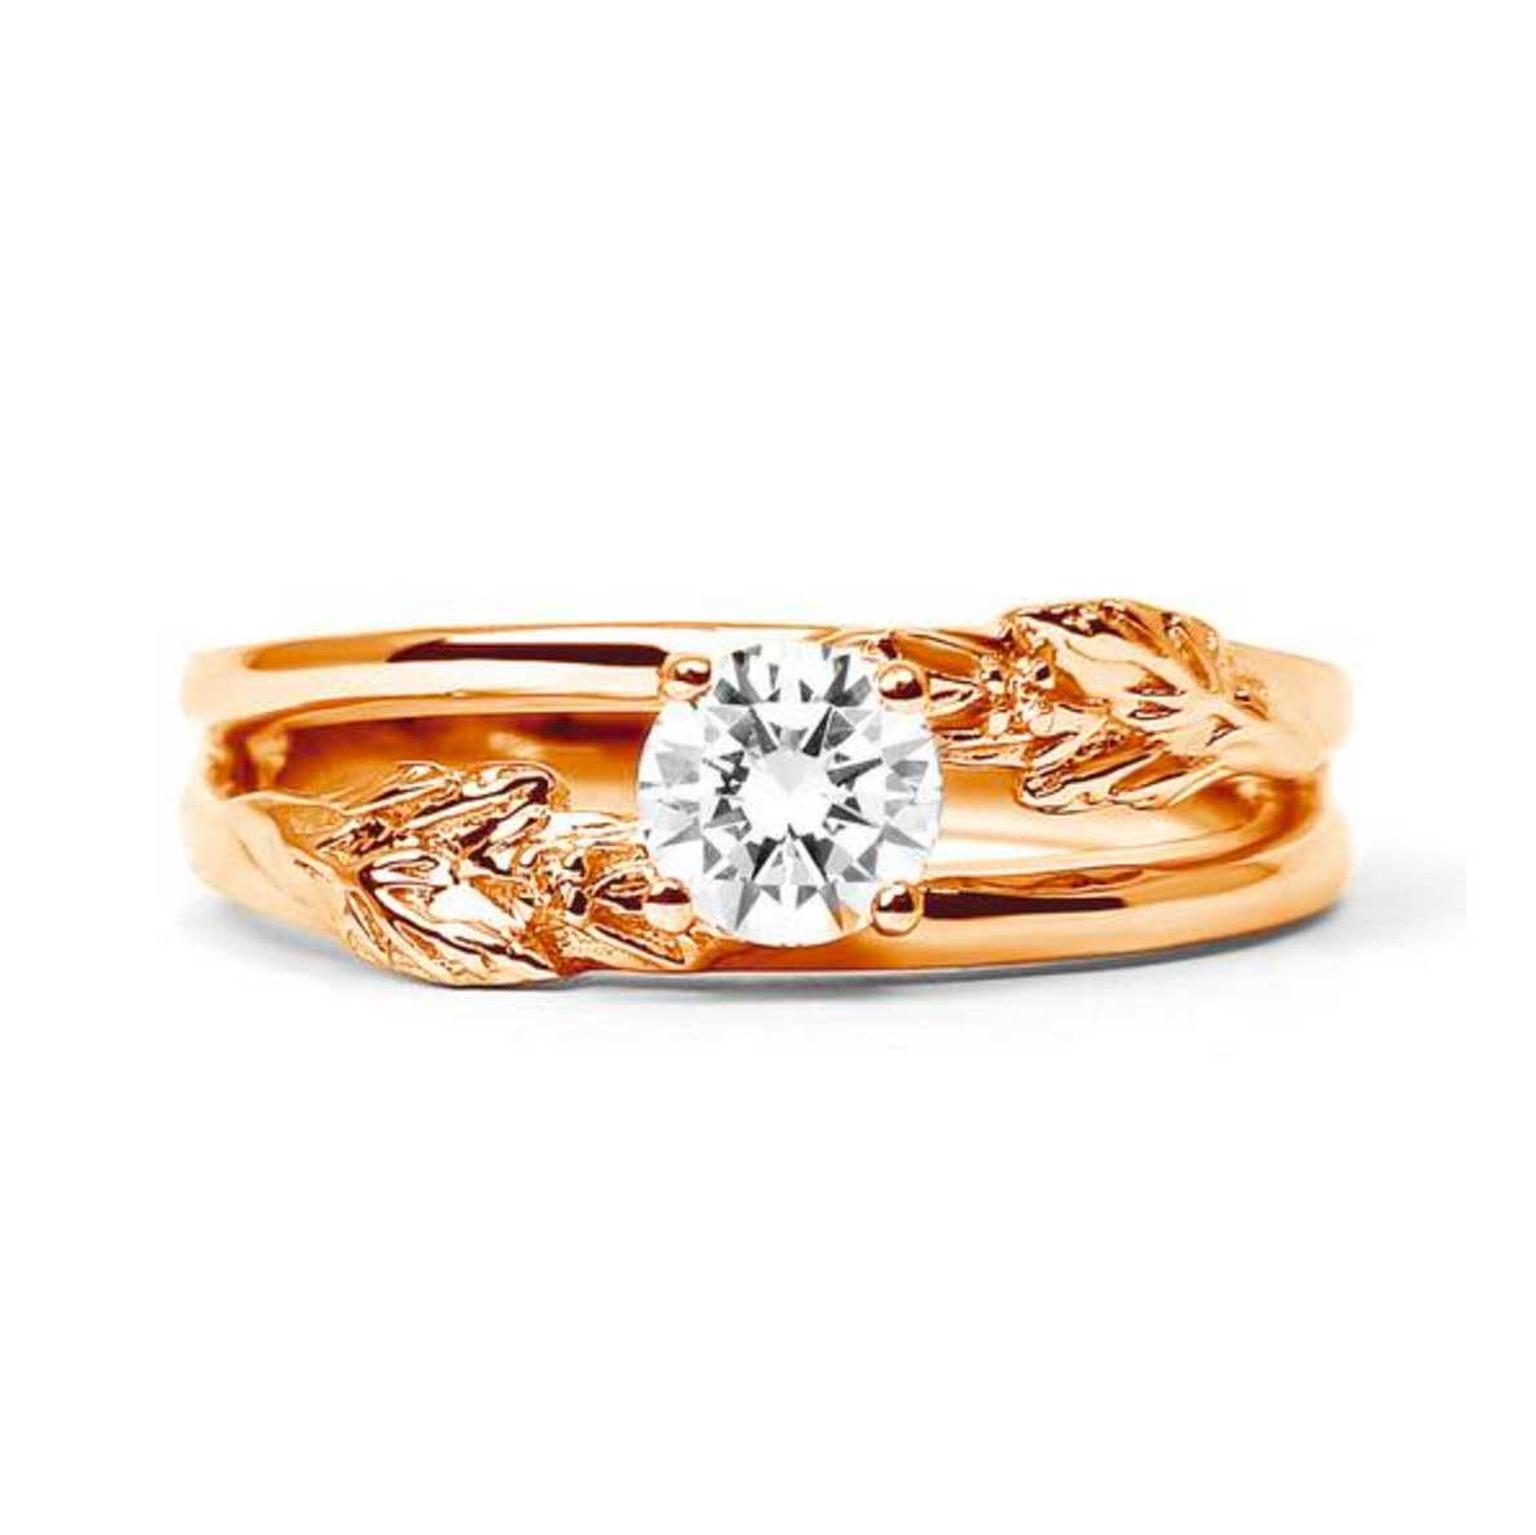 Arabel Lebrusan Royal Oak ethical diamond engagement ring in Fairtrade gold